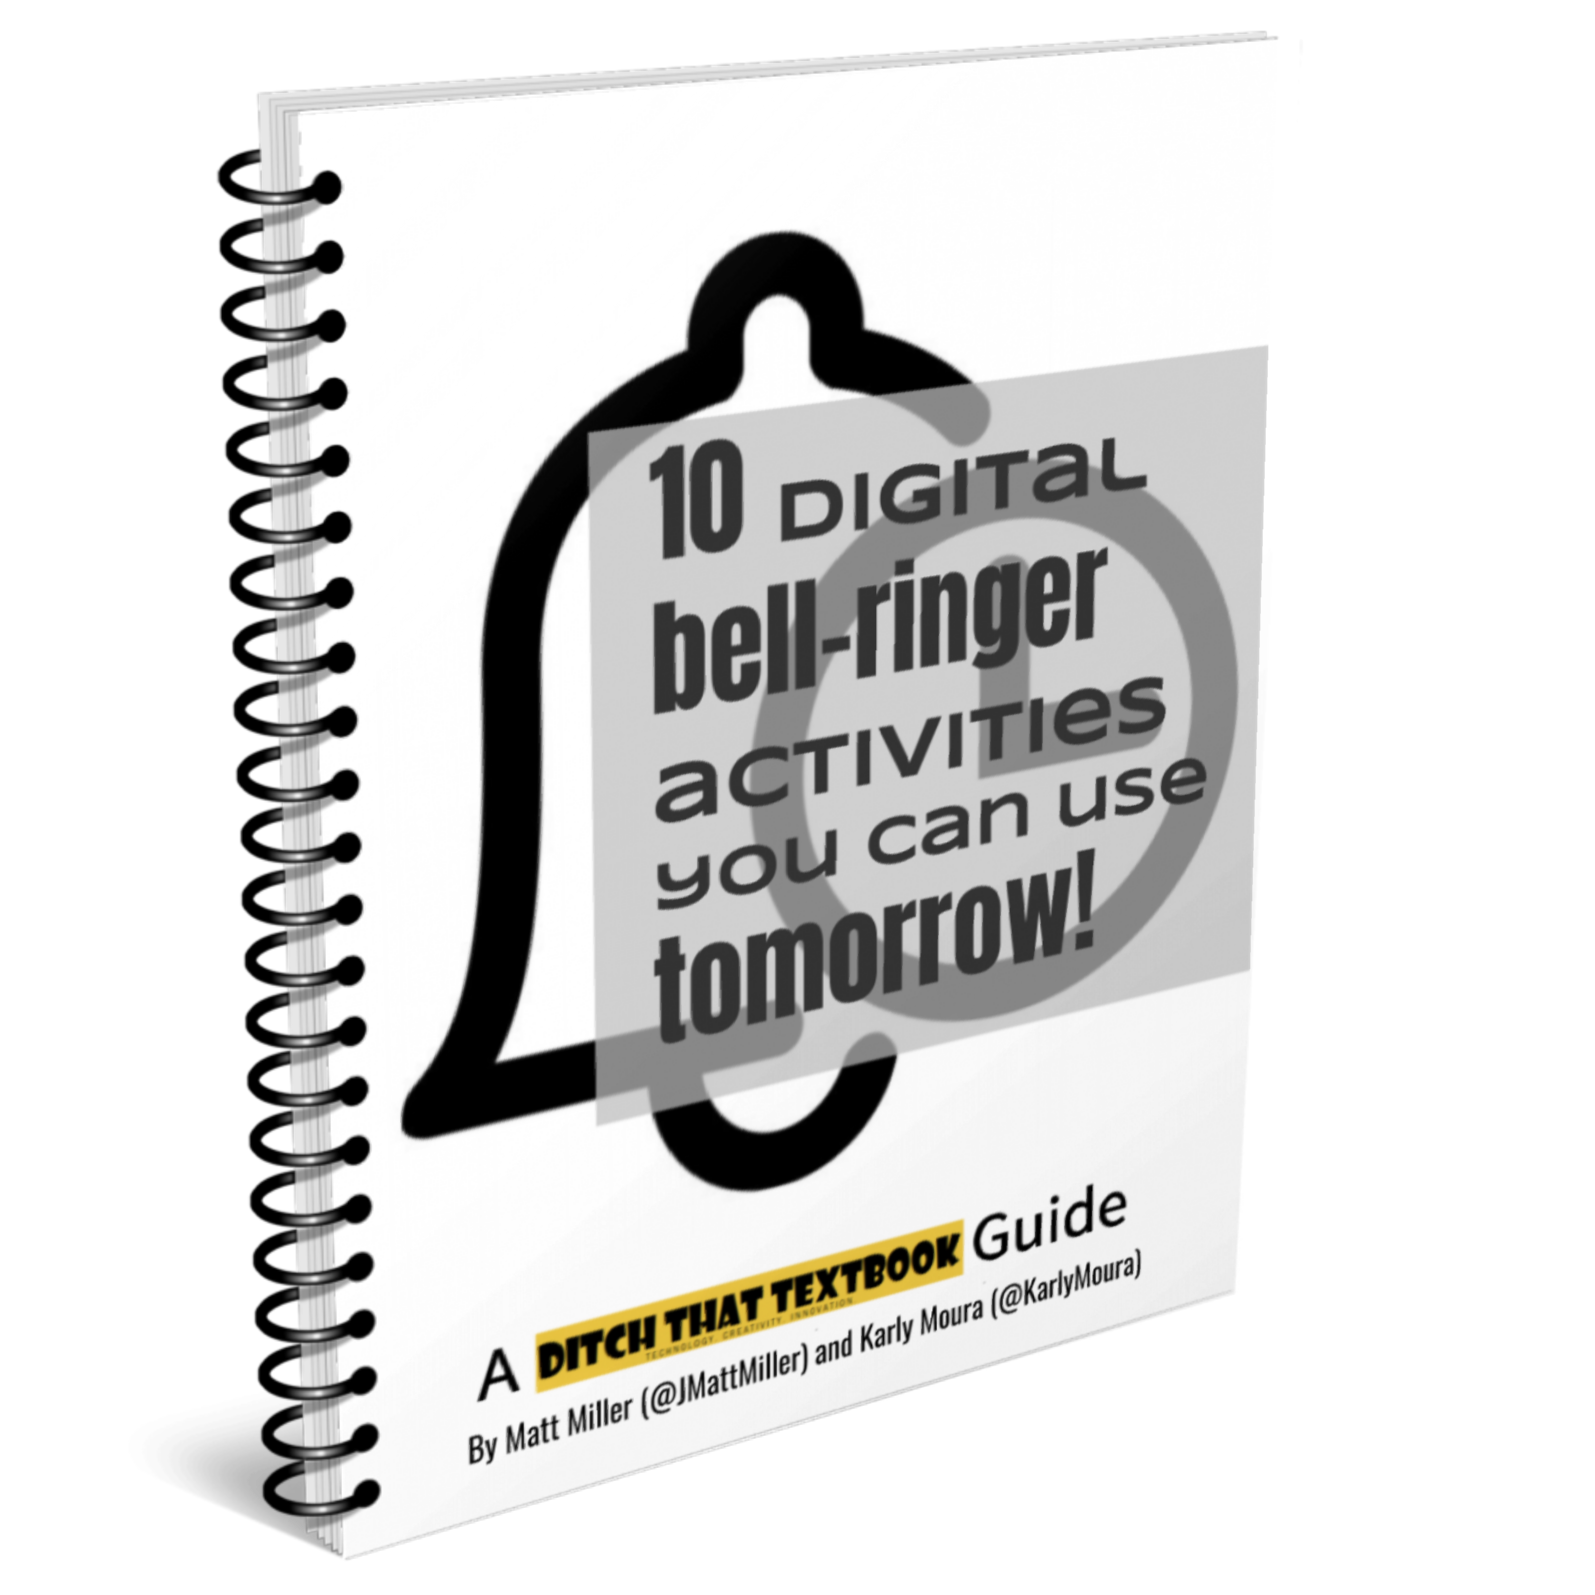 10 digital bellringers ebook